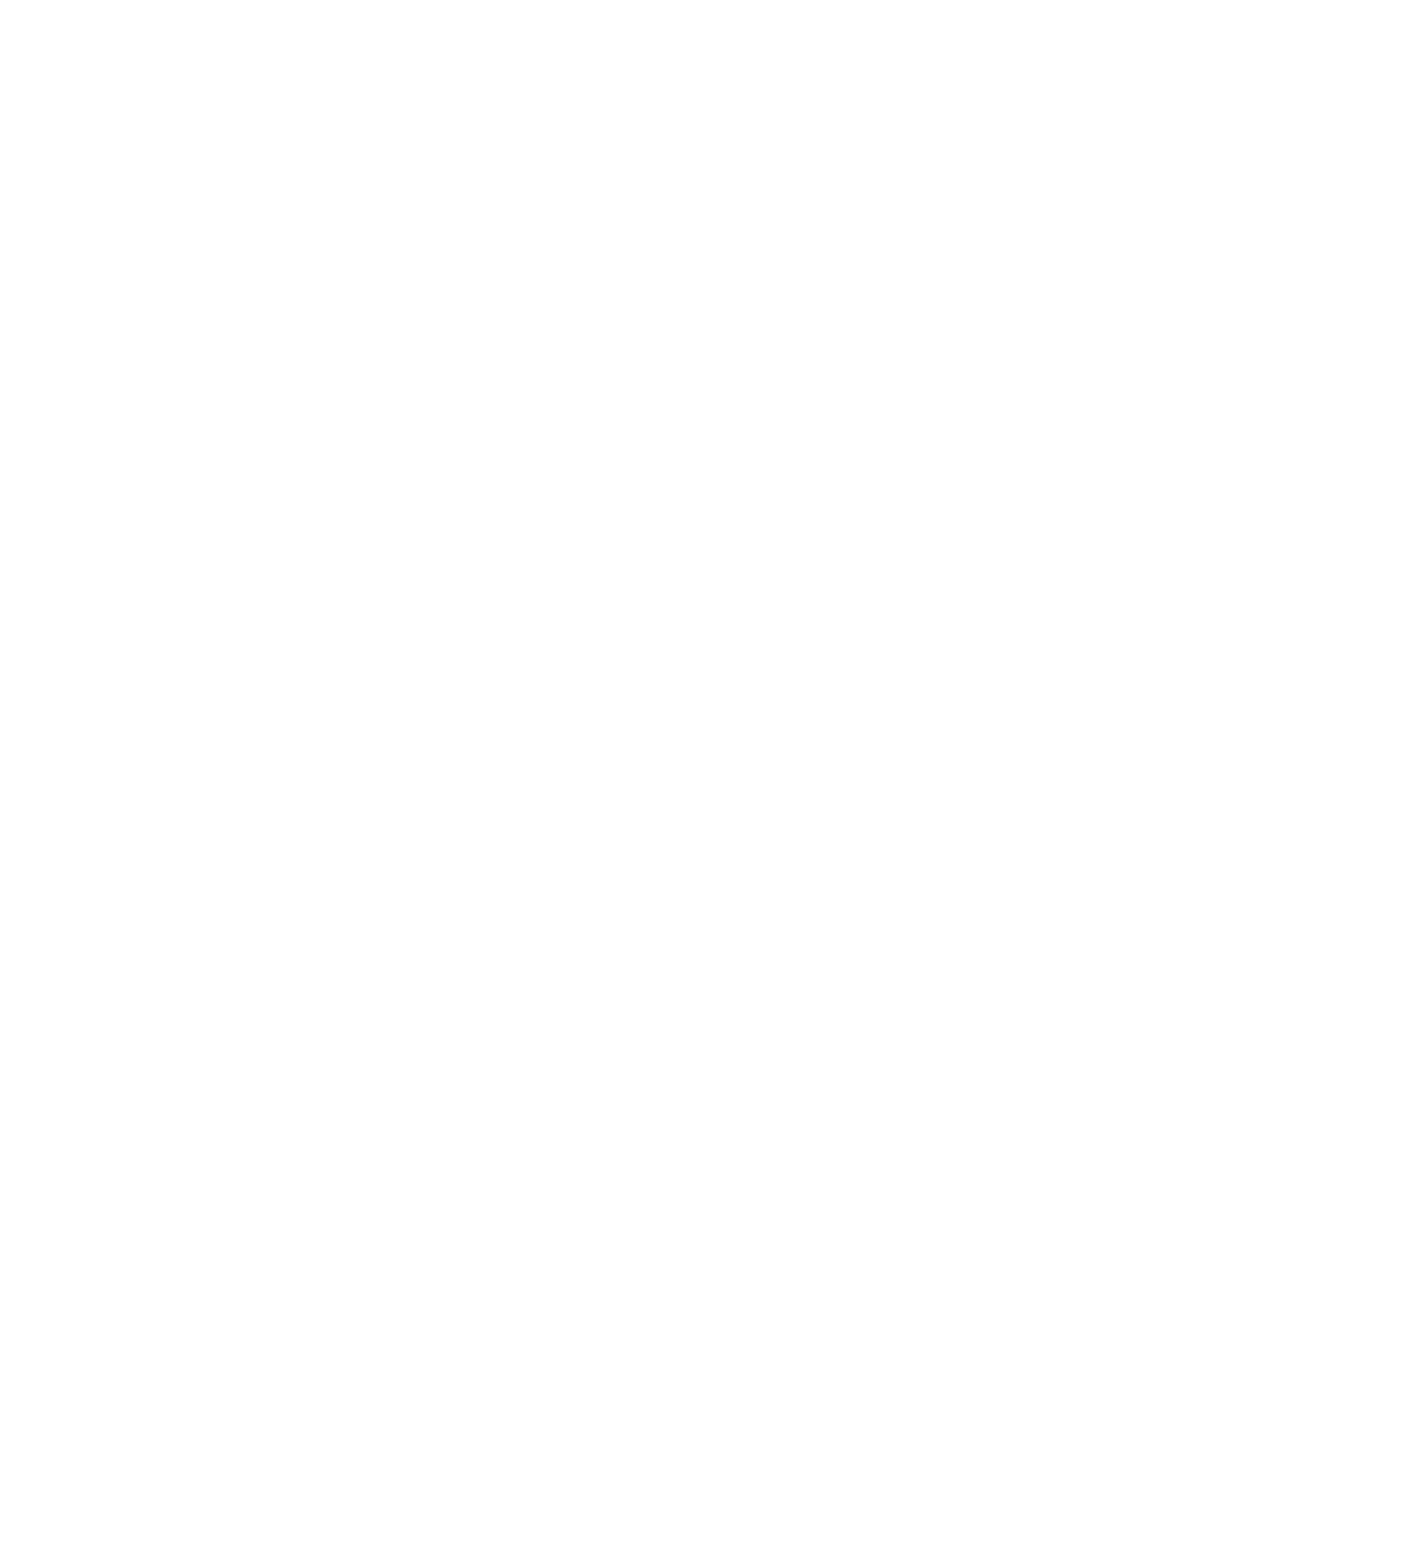 Kaufman & Broad logo for dark backgrounds (transparent PNG)